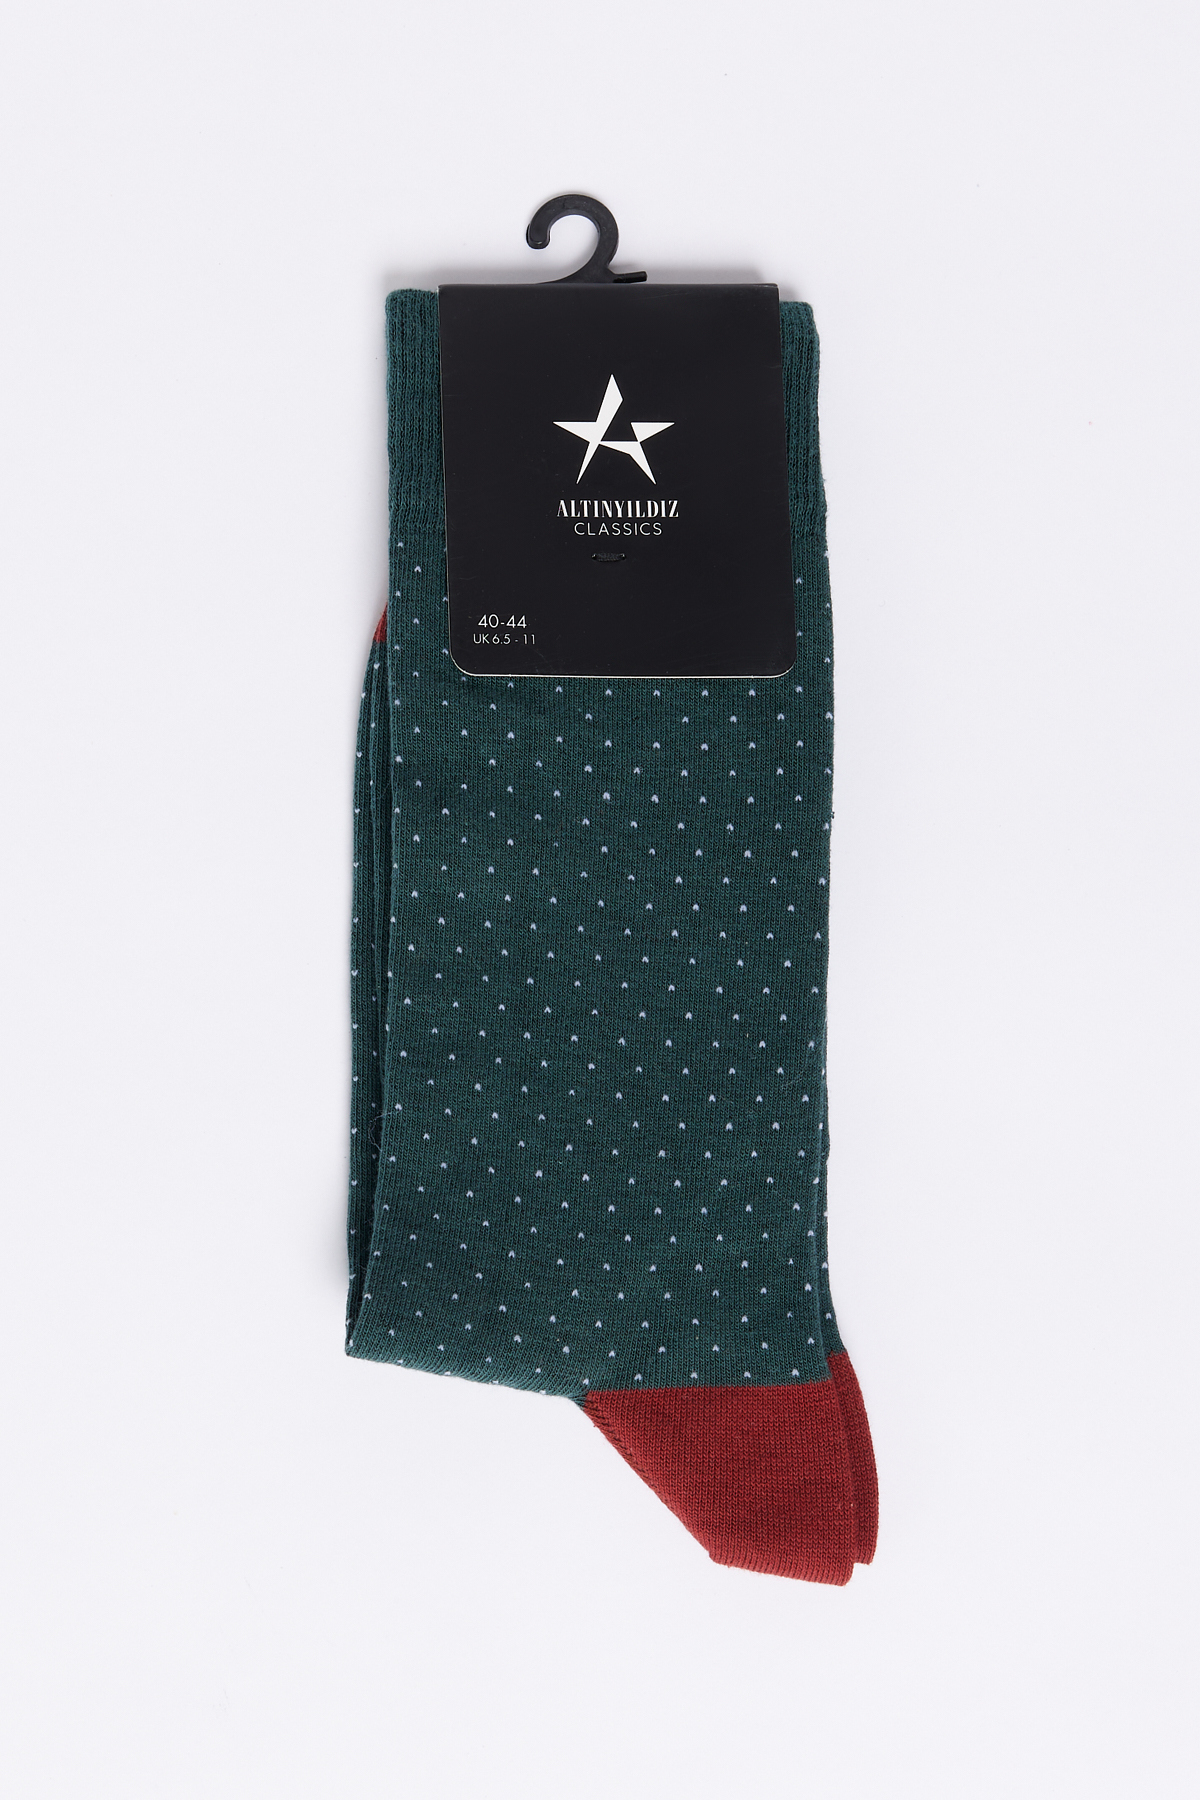 ALTINYILDIZ CLASSICS Men's Green-White Single Patterned Socks